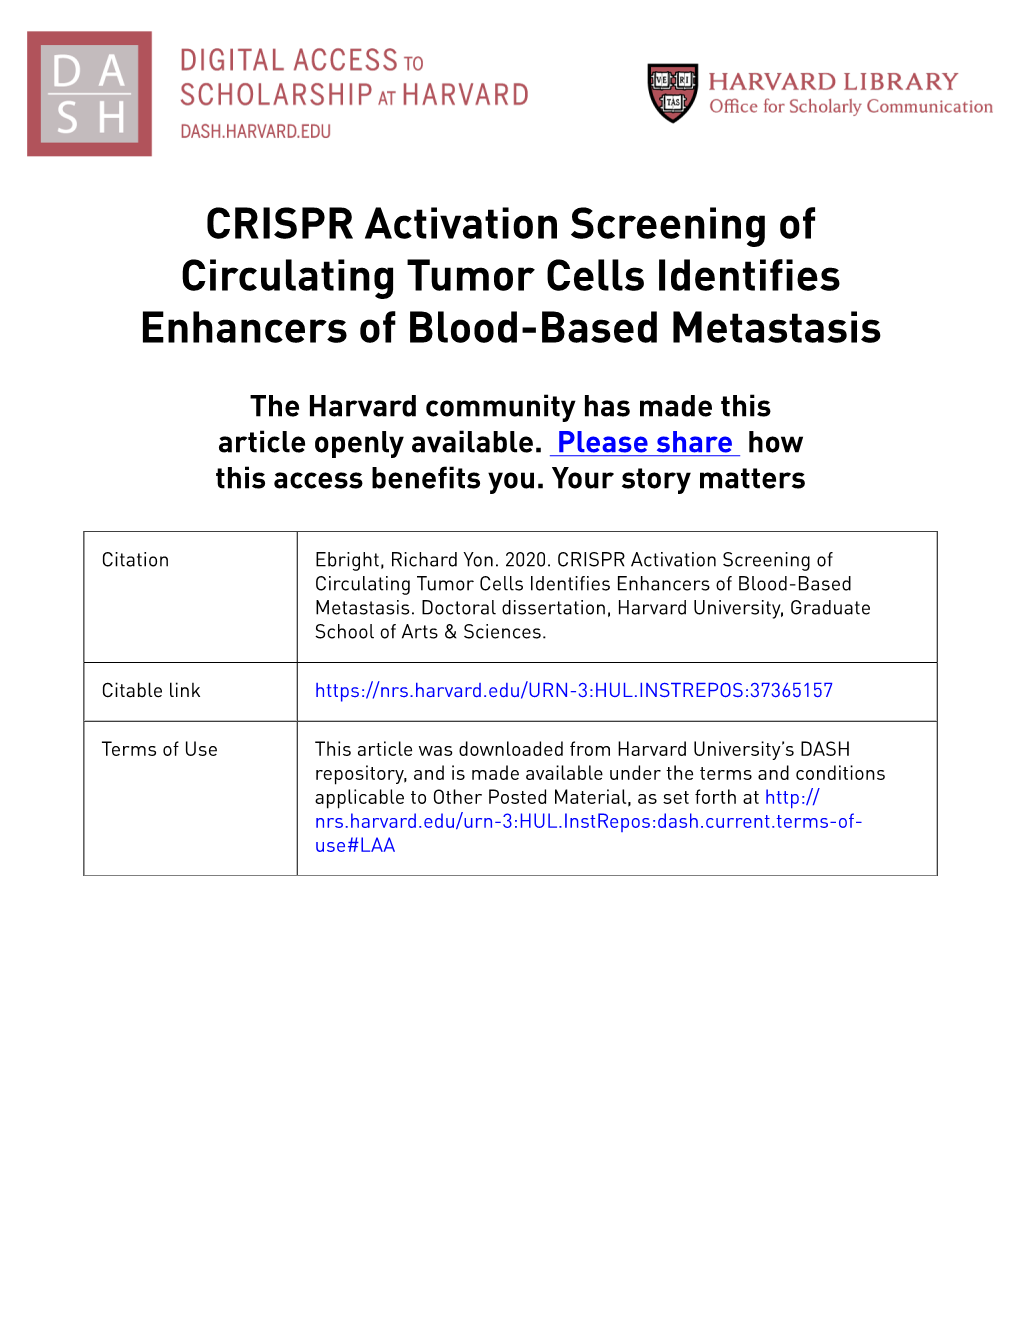 CRISPR Activation Screening of Circulating Tumor Cells Identifies Enhancers of Blood-Based Metastasis